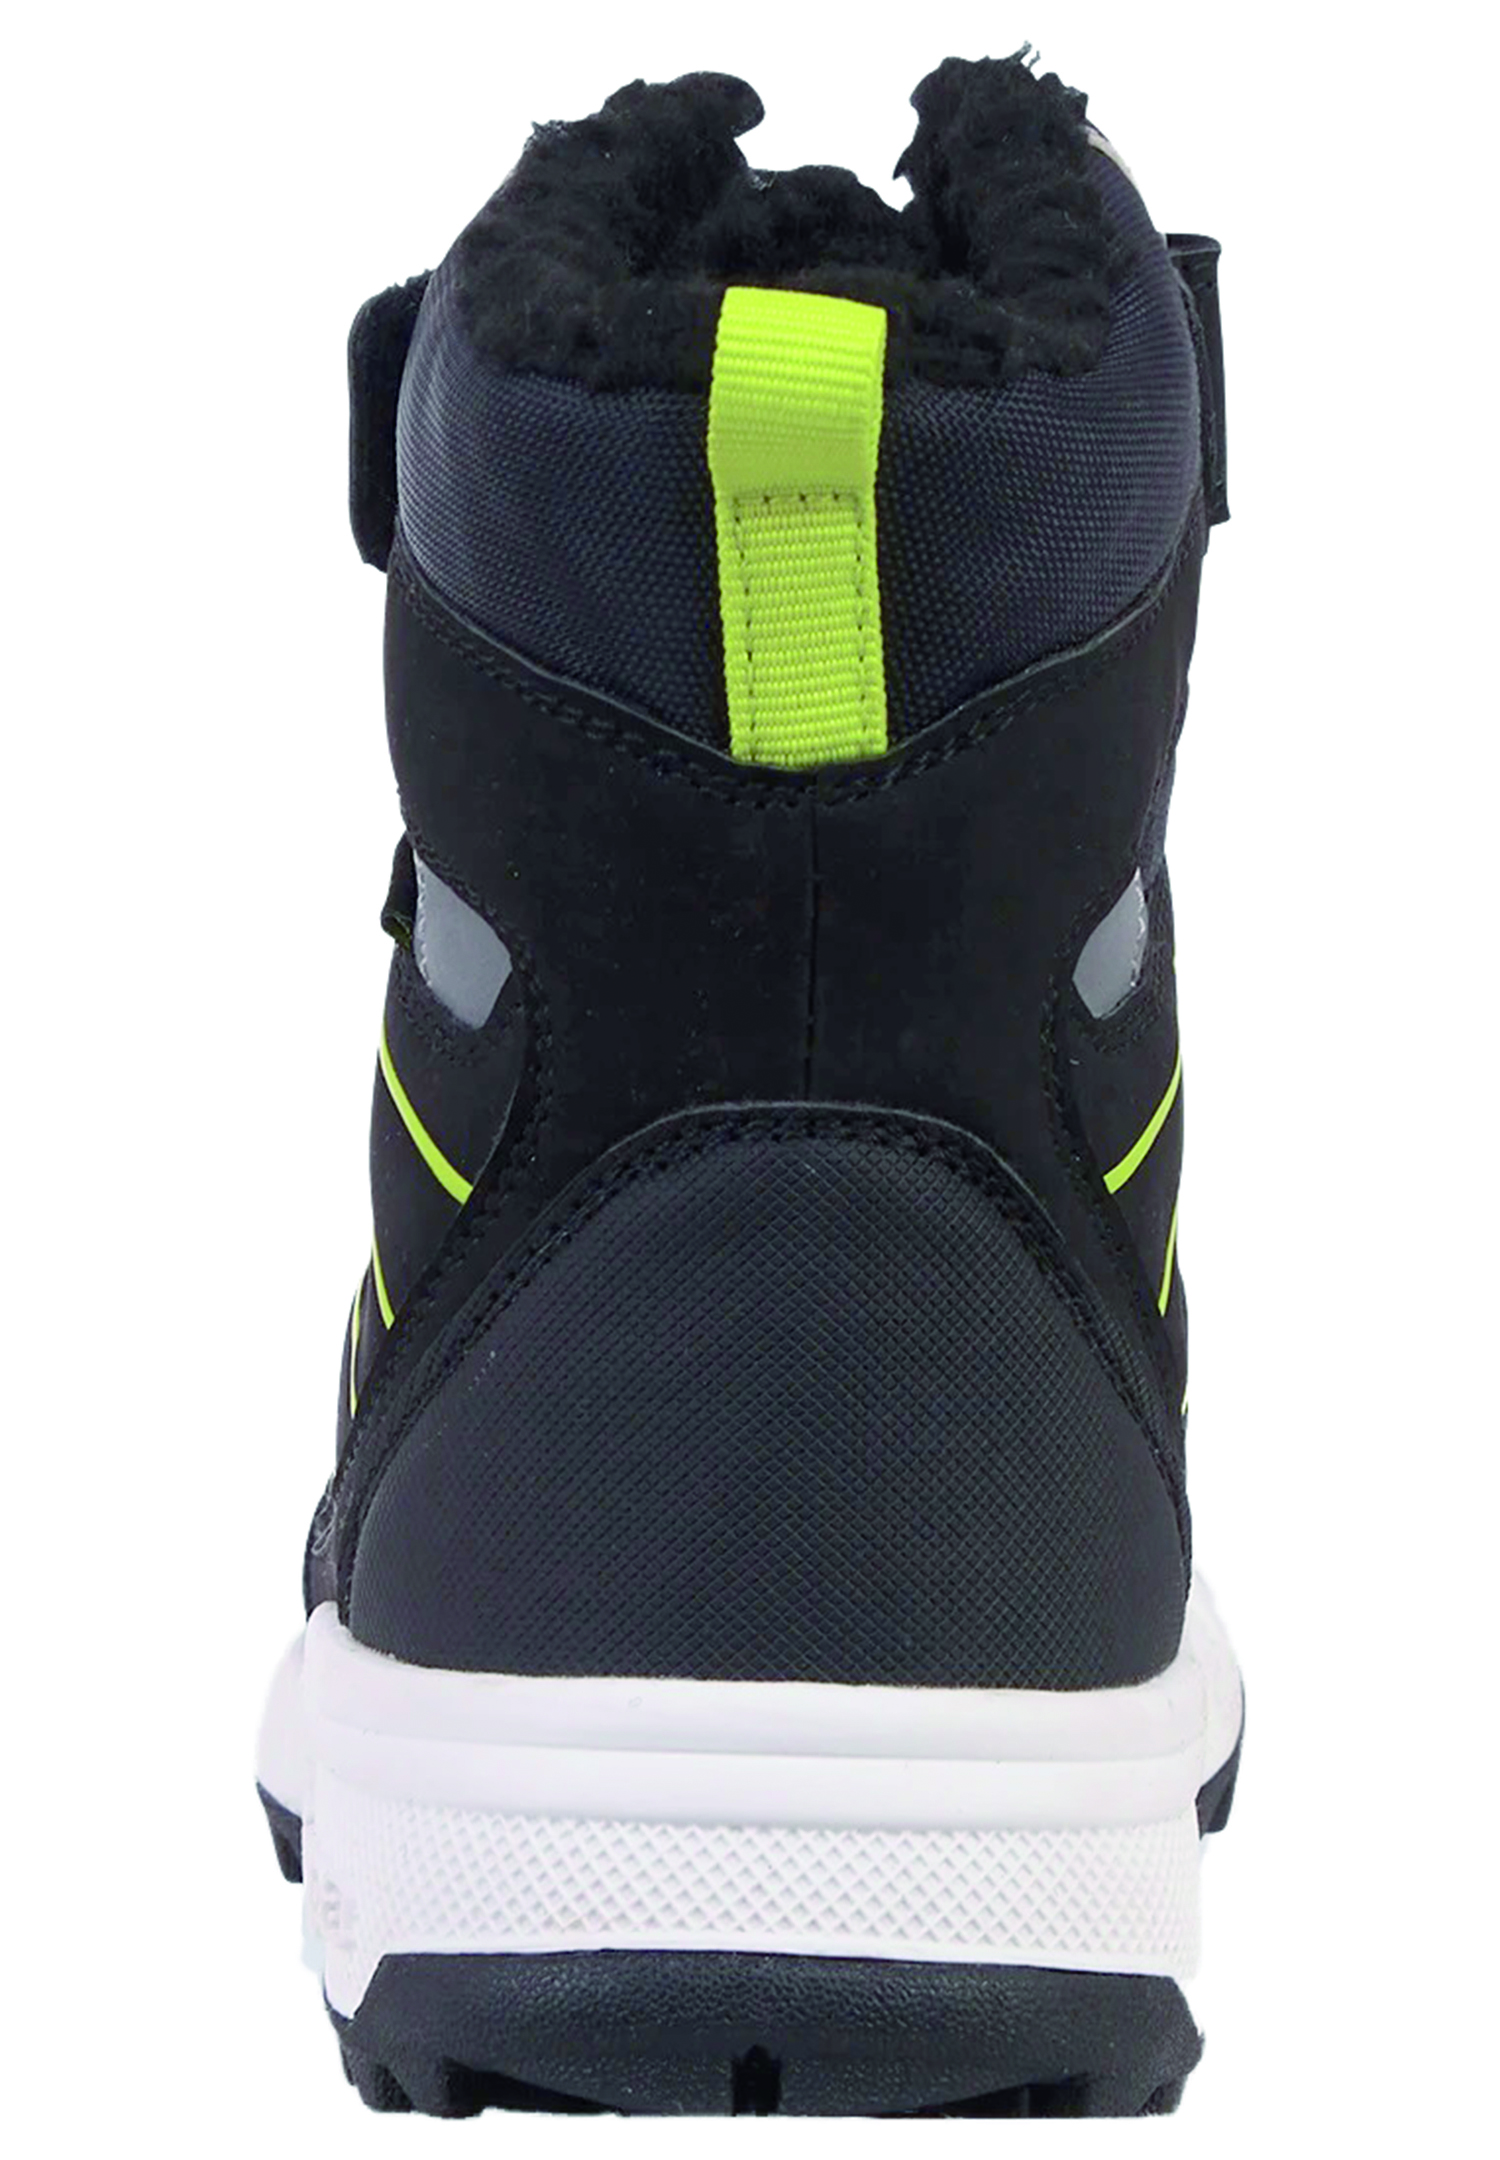 Kappa Unitsex Stiefel Sneaker Winterschuh gefüttert Stylecode 260975K schwarz